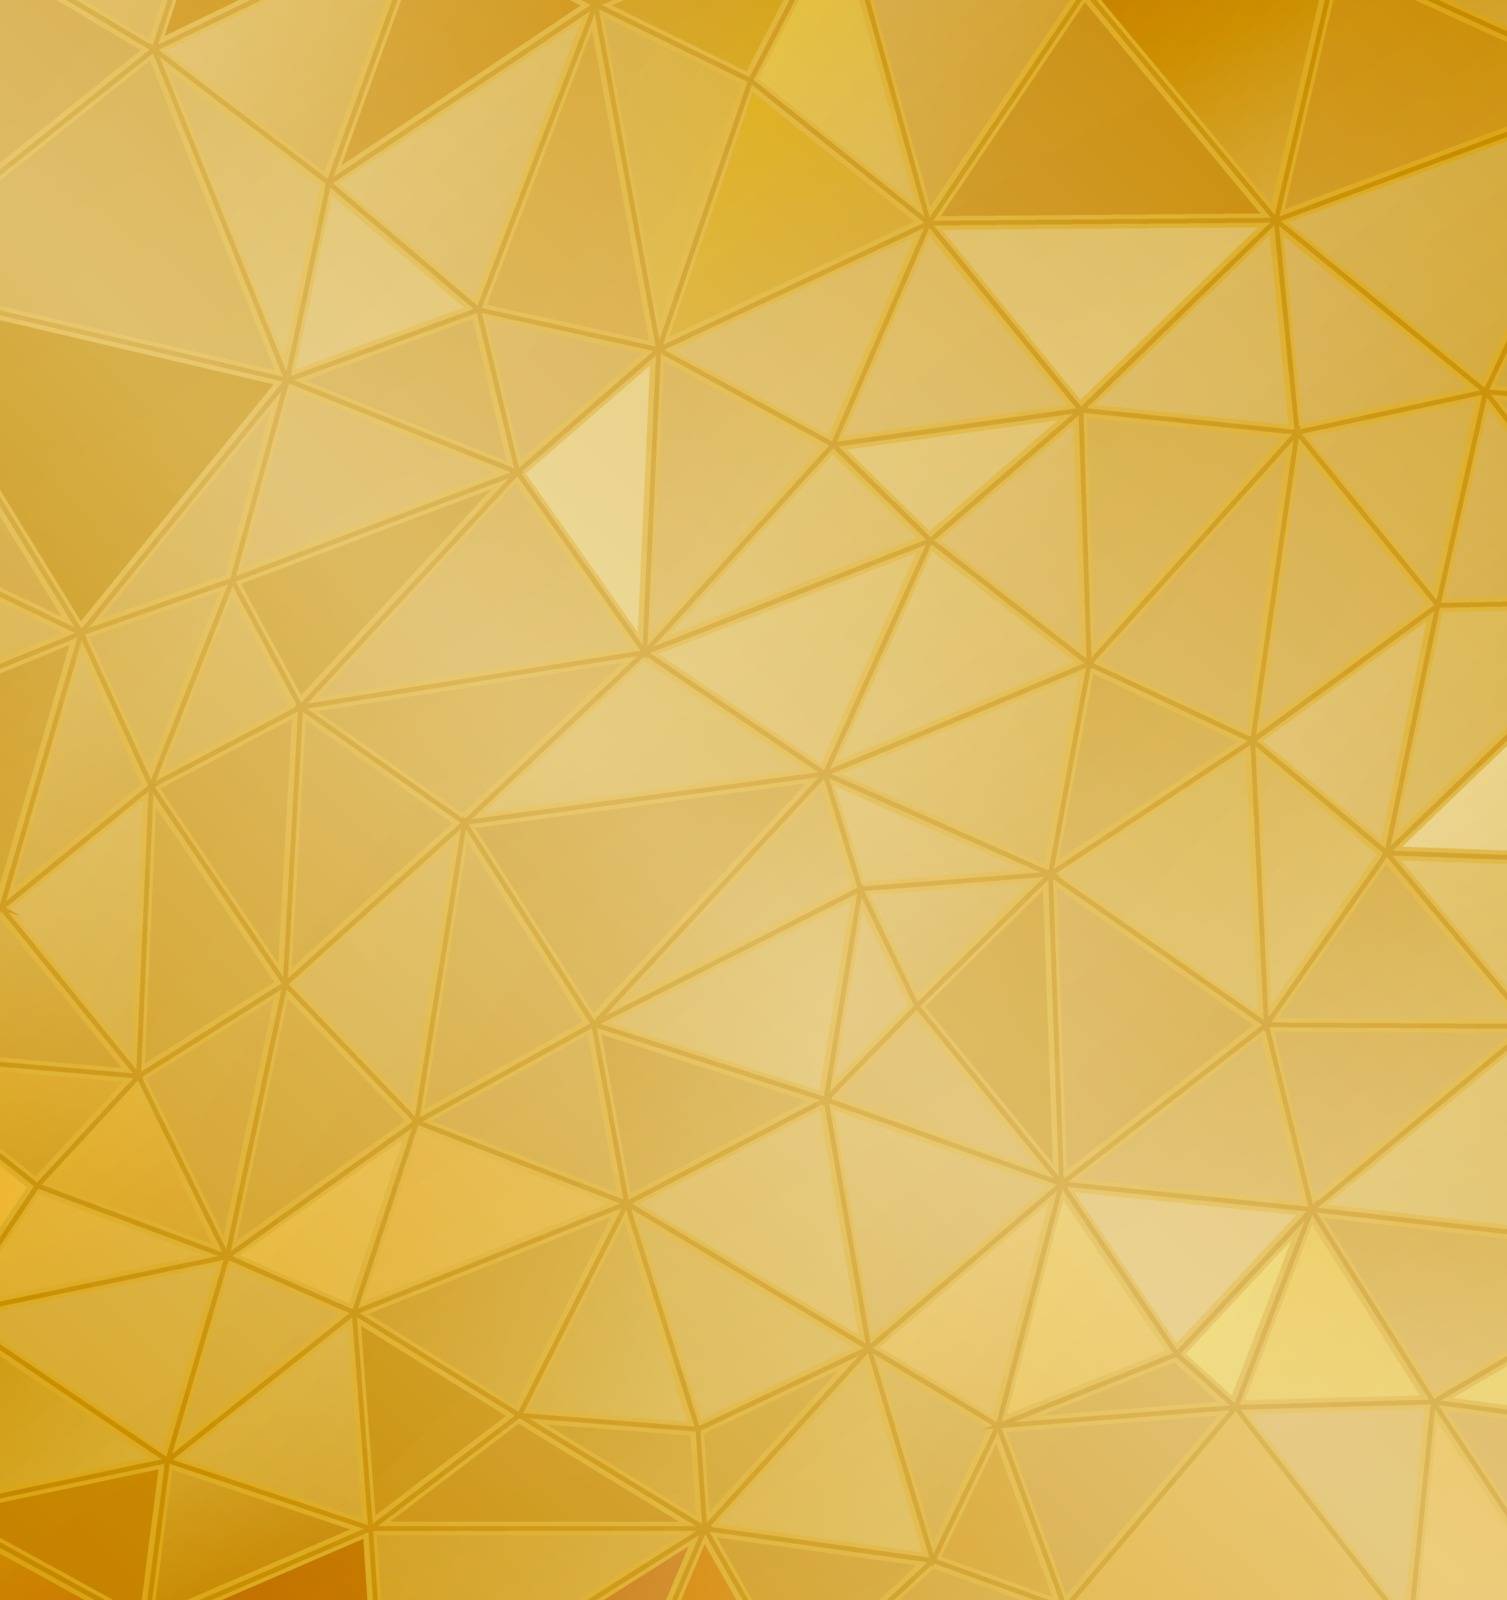 Background golden of geometric shapes by odina222